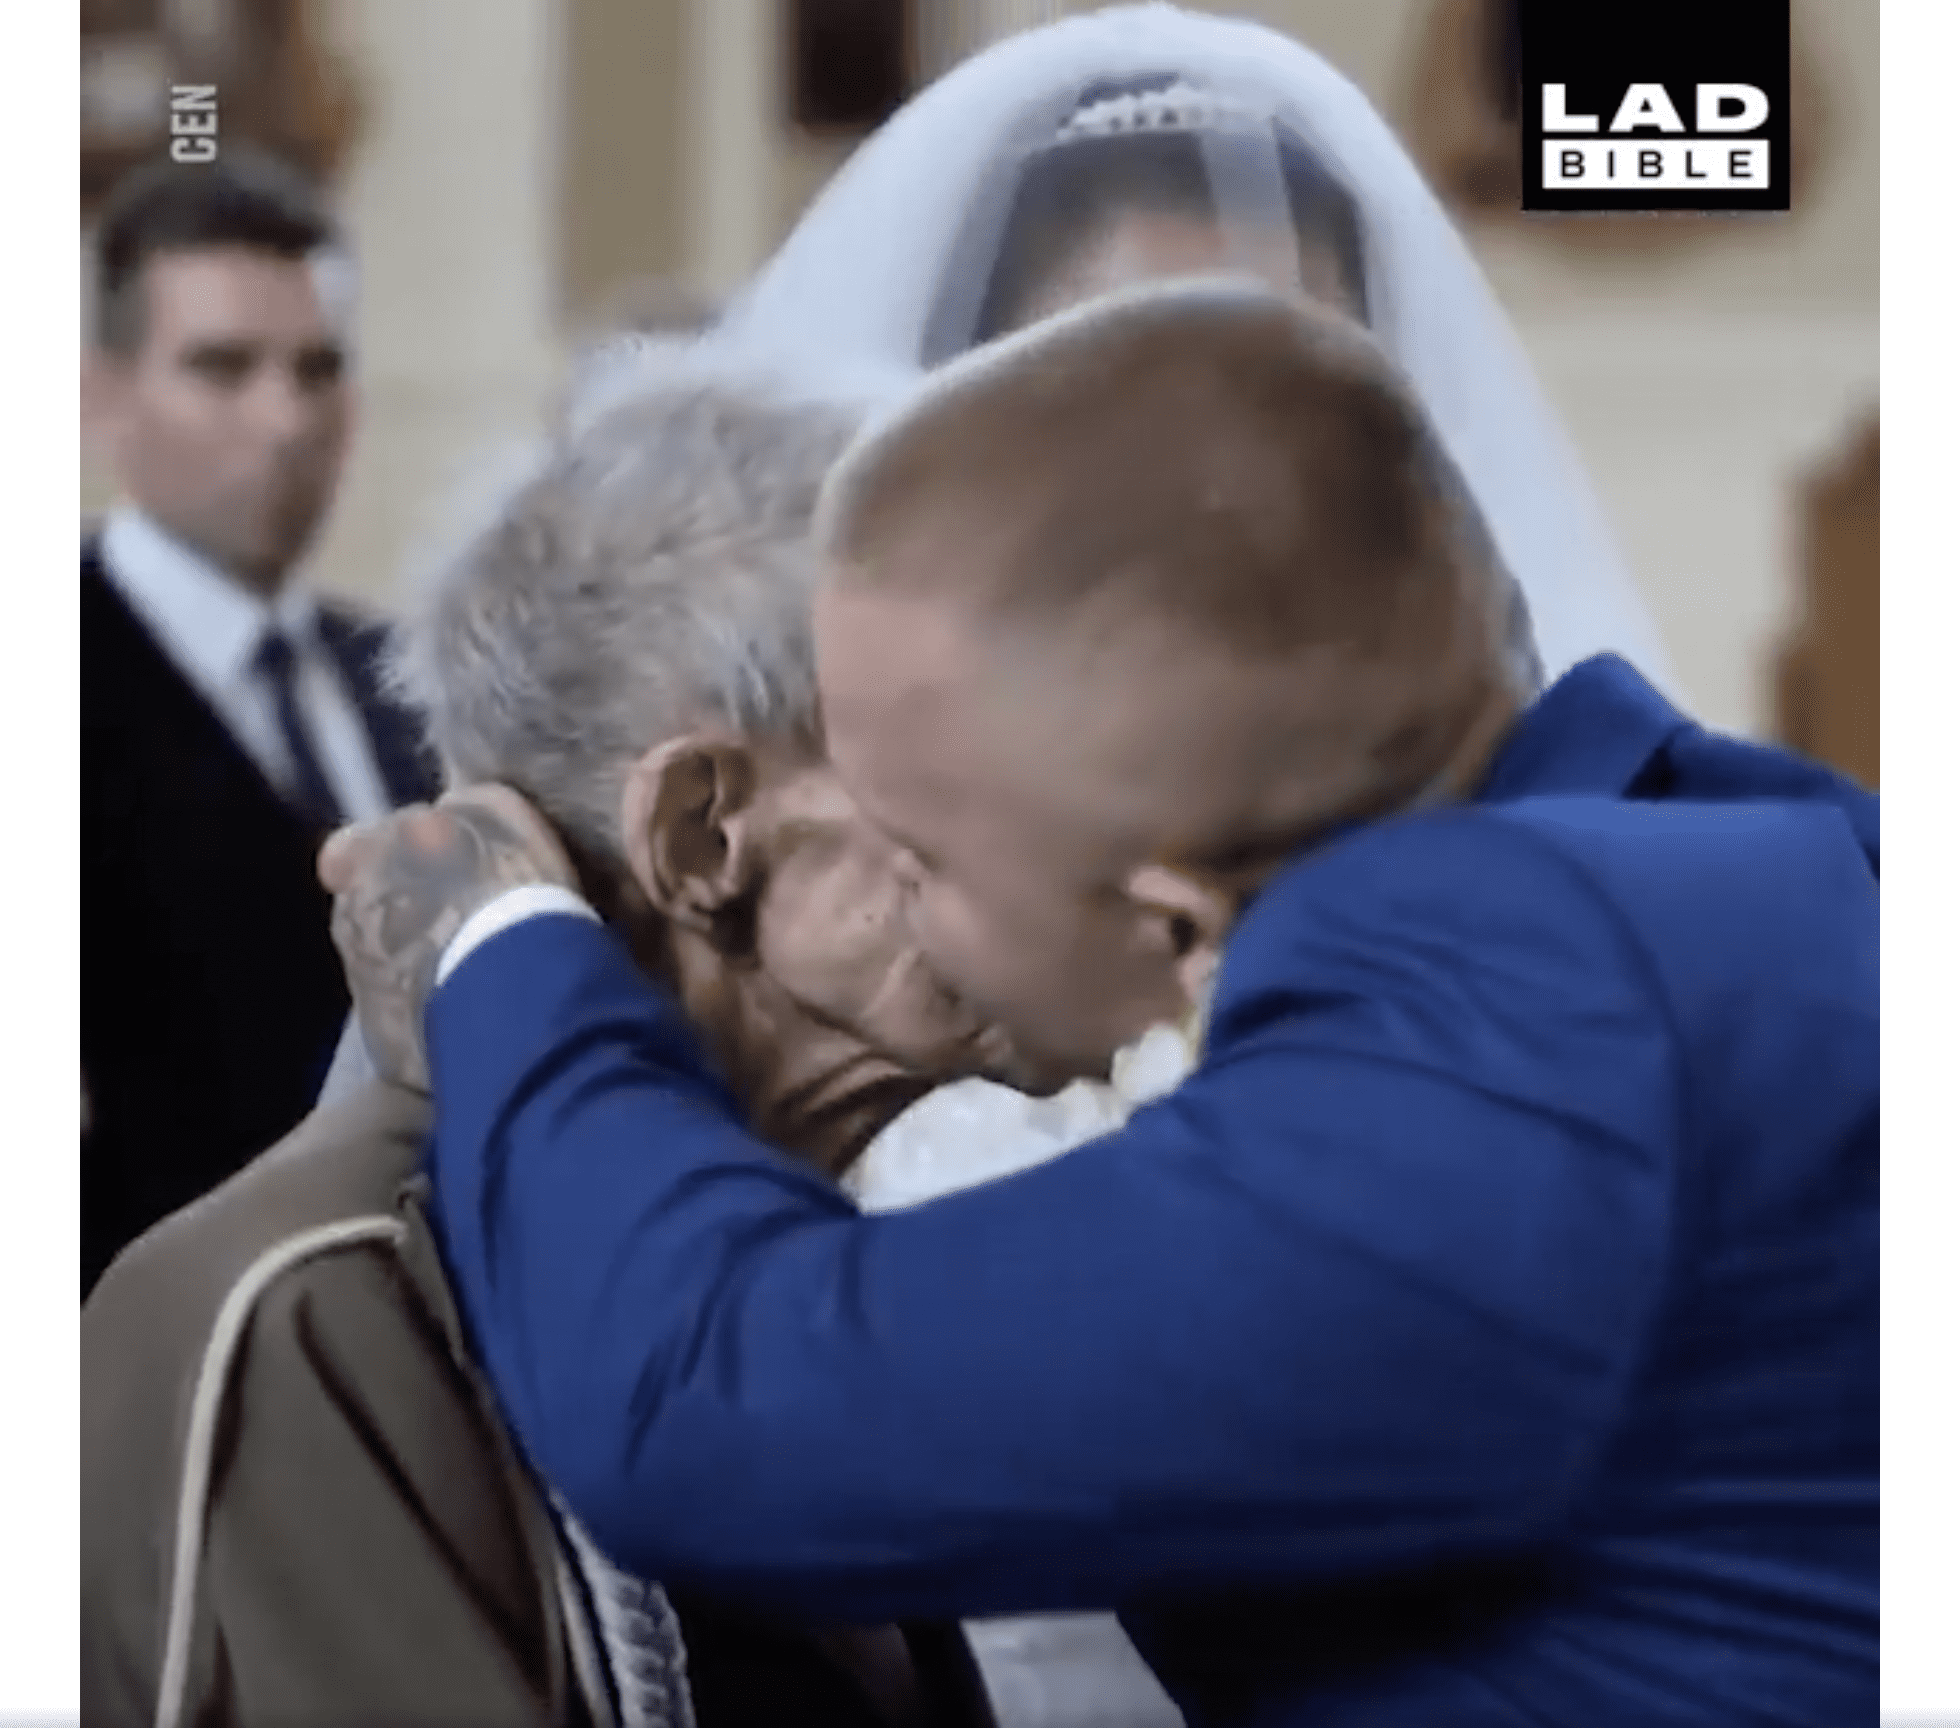 The groom kisses Bronislaw "Grom" Karwowski. | Source: facebook.com/LADbible